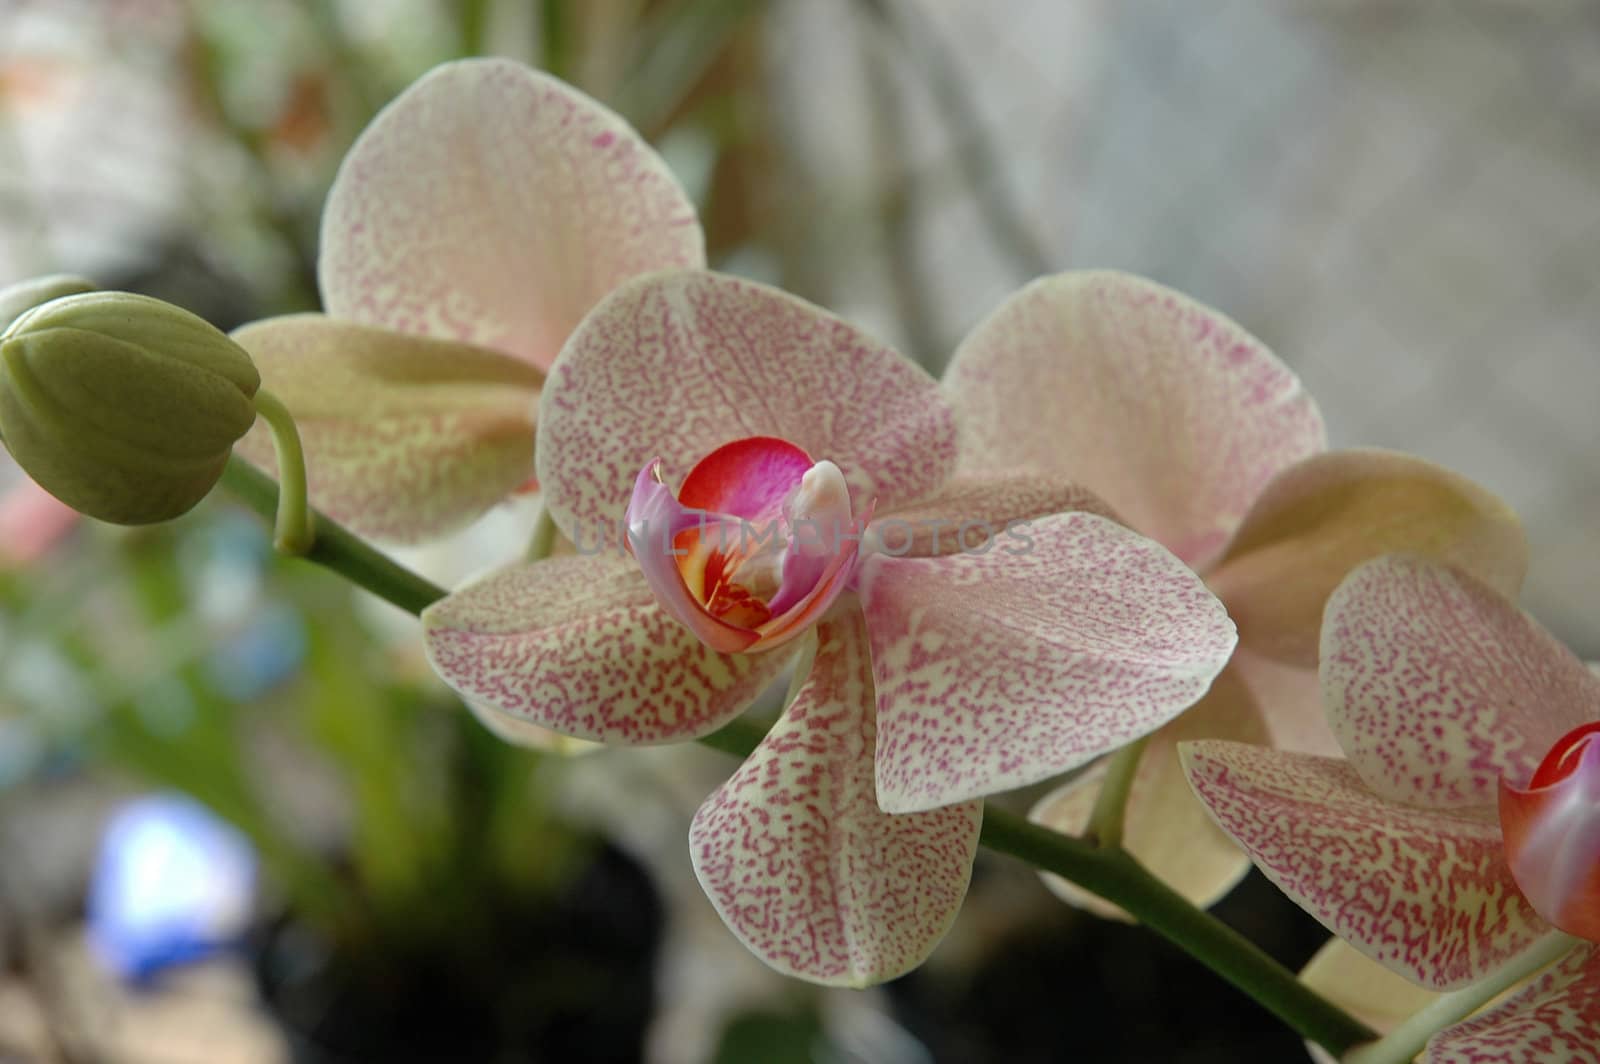 dendrobium orchid by bluemarine